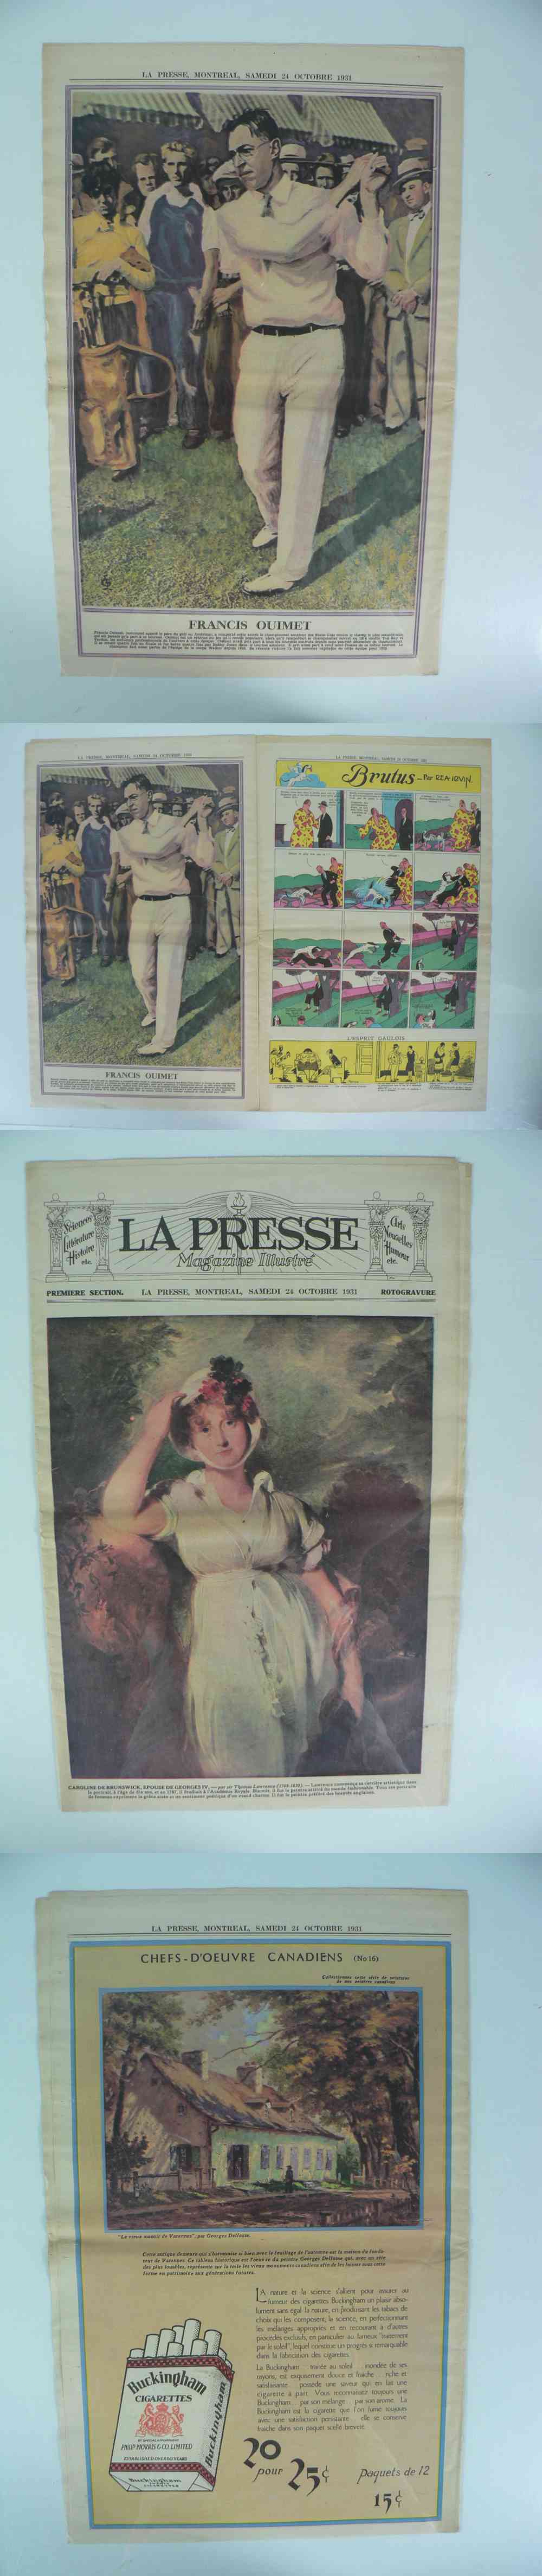 1931 LA PRESSE FULL NEWSPAPER INSIDE PHOTO F. OUIMET photo